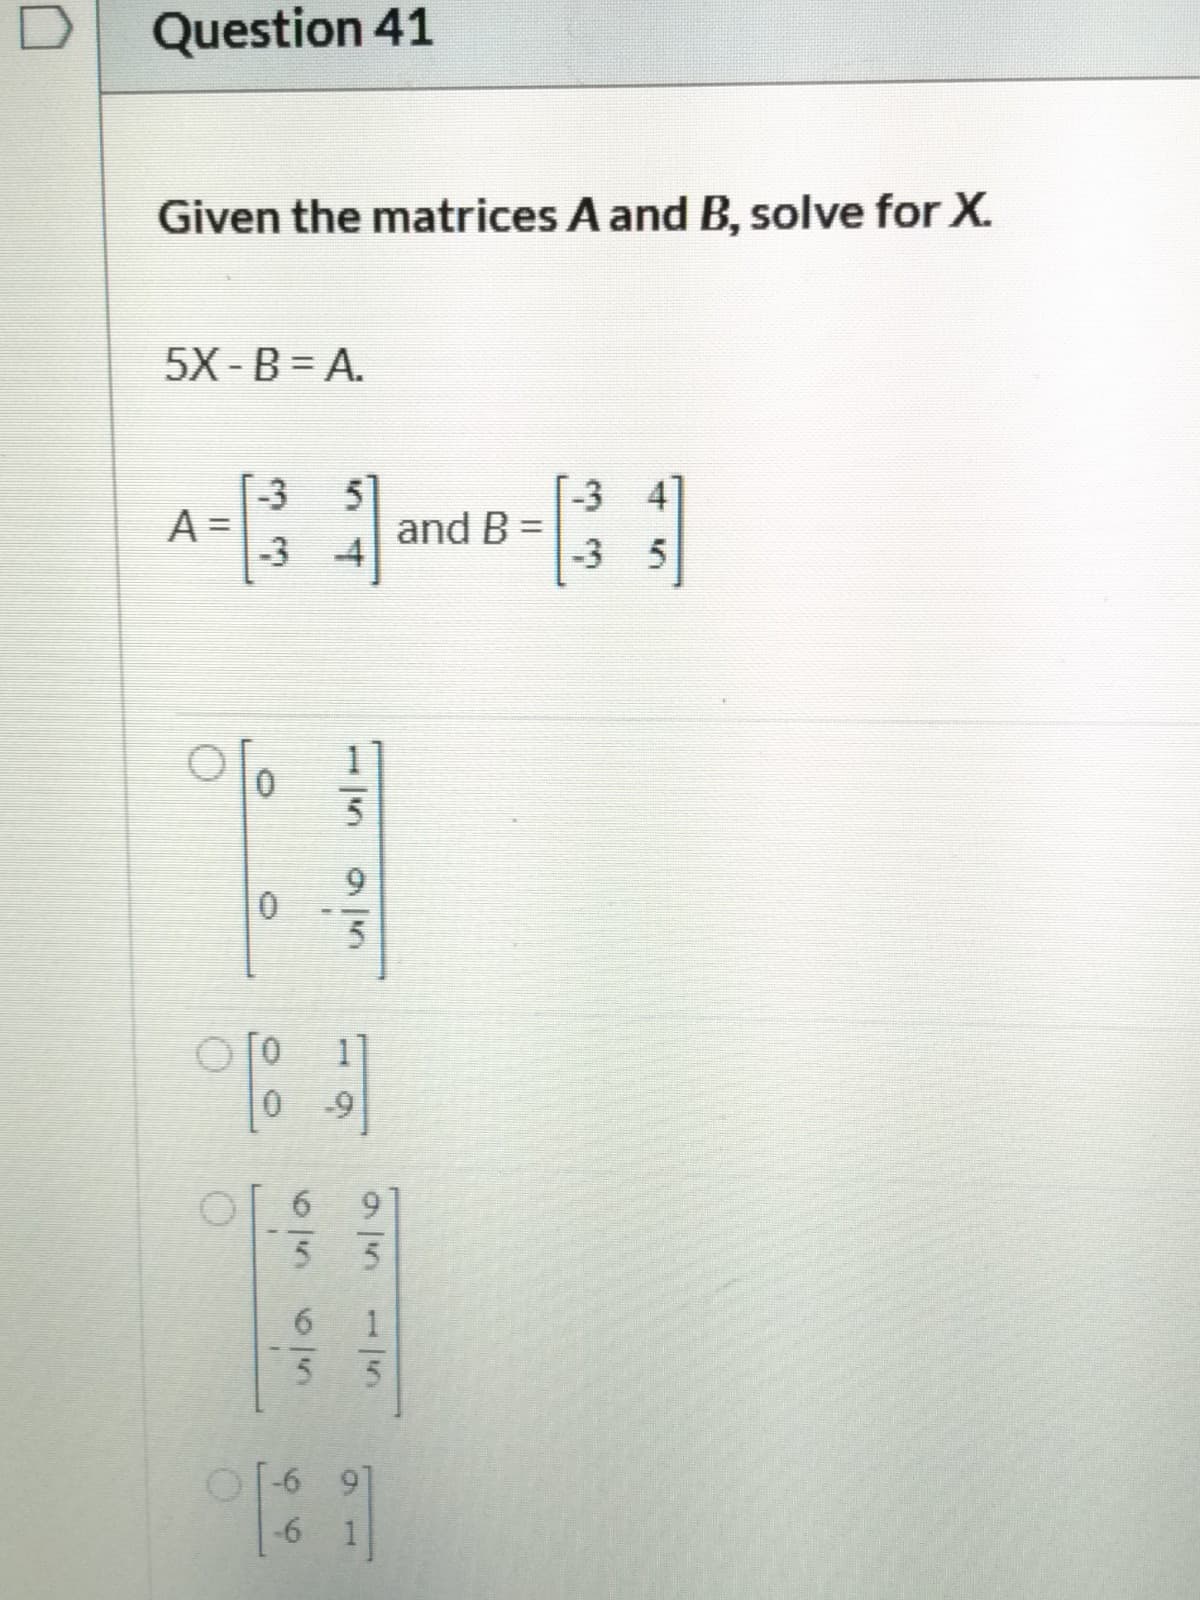 Given the matrices A and B, solve for X.
5X-B = A.
[-3
-3 4]
A =
-3
and B =
-3 5
01
11
0
-9
O 6
55
9.
6.
T-6 9]
-6
1
1/5
95
115
515
